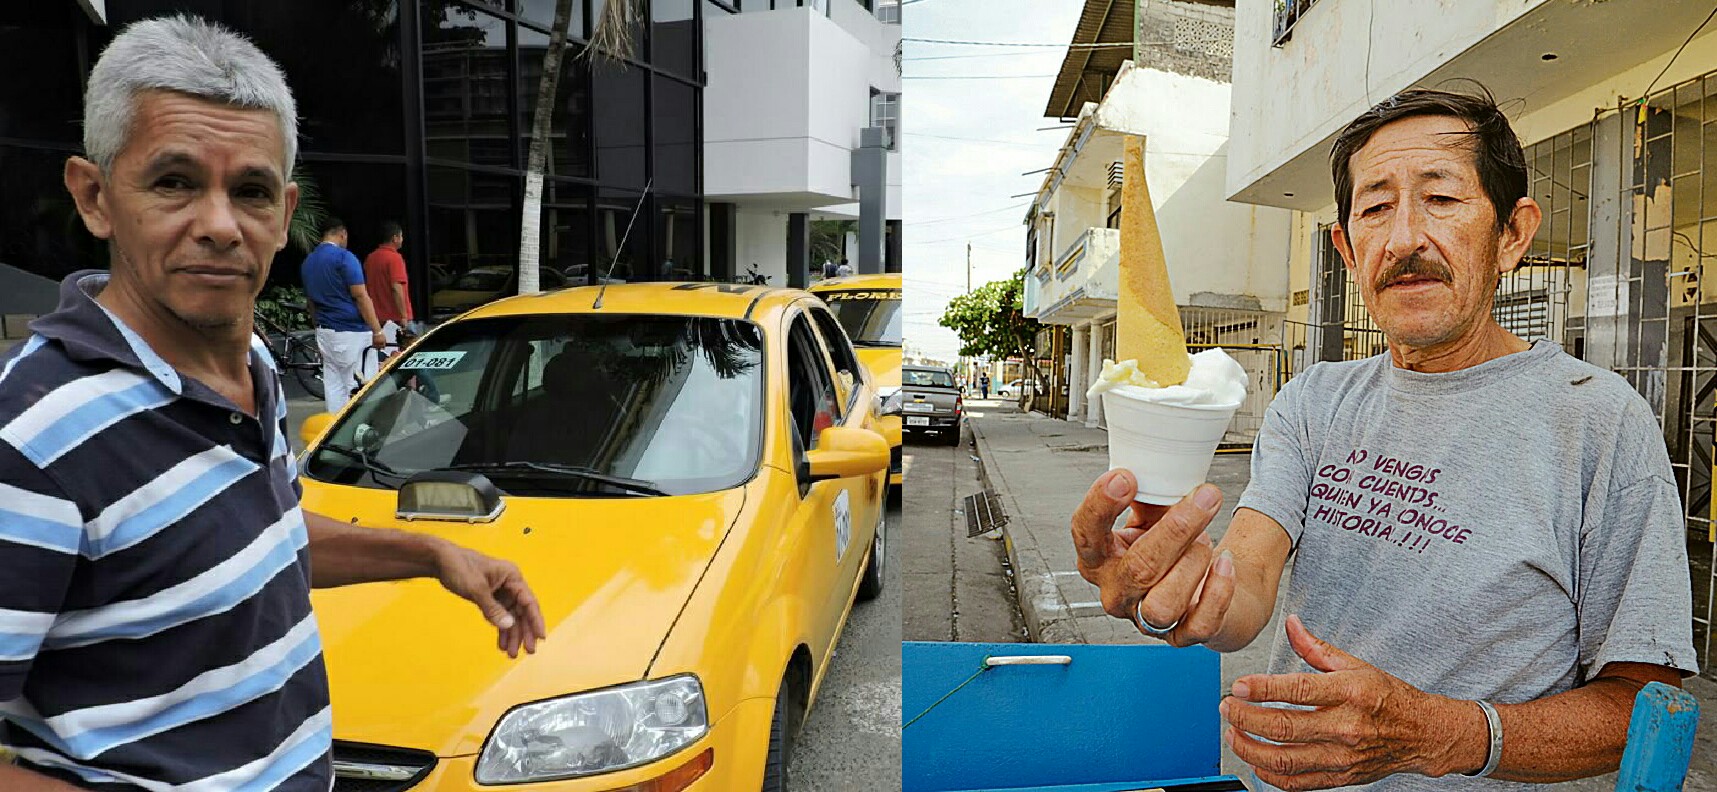 Taxistas ofrecen helado Ideal gratis para competir contra Cabify